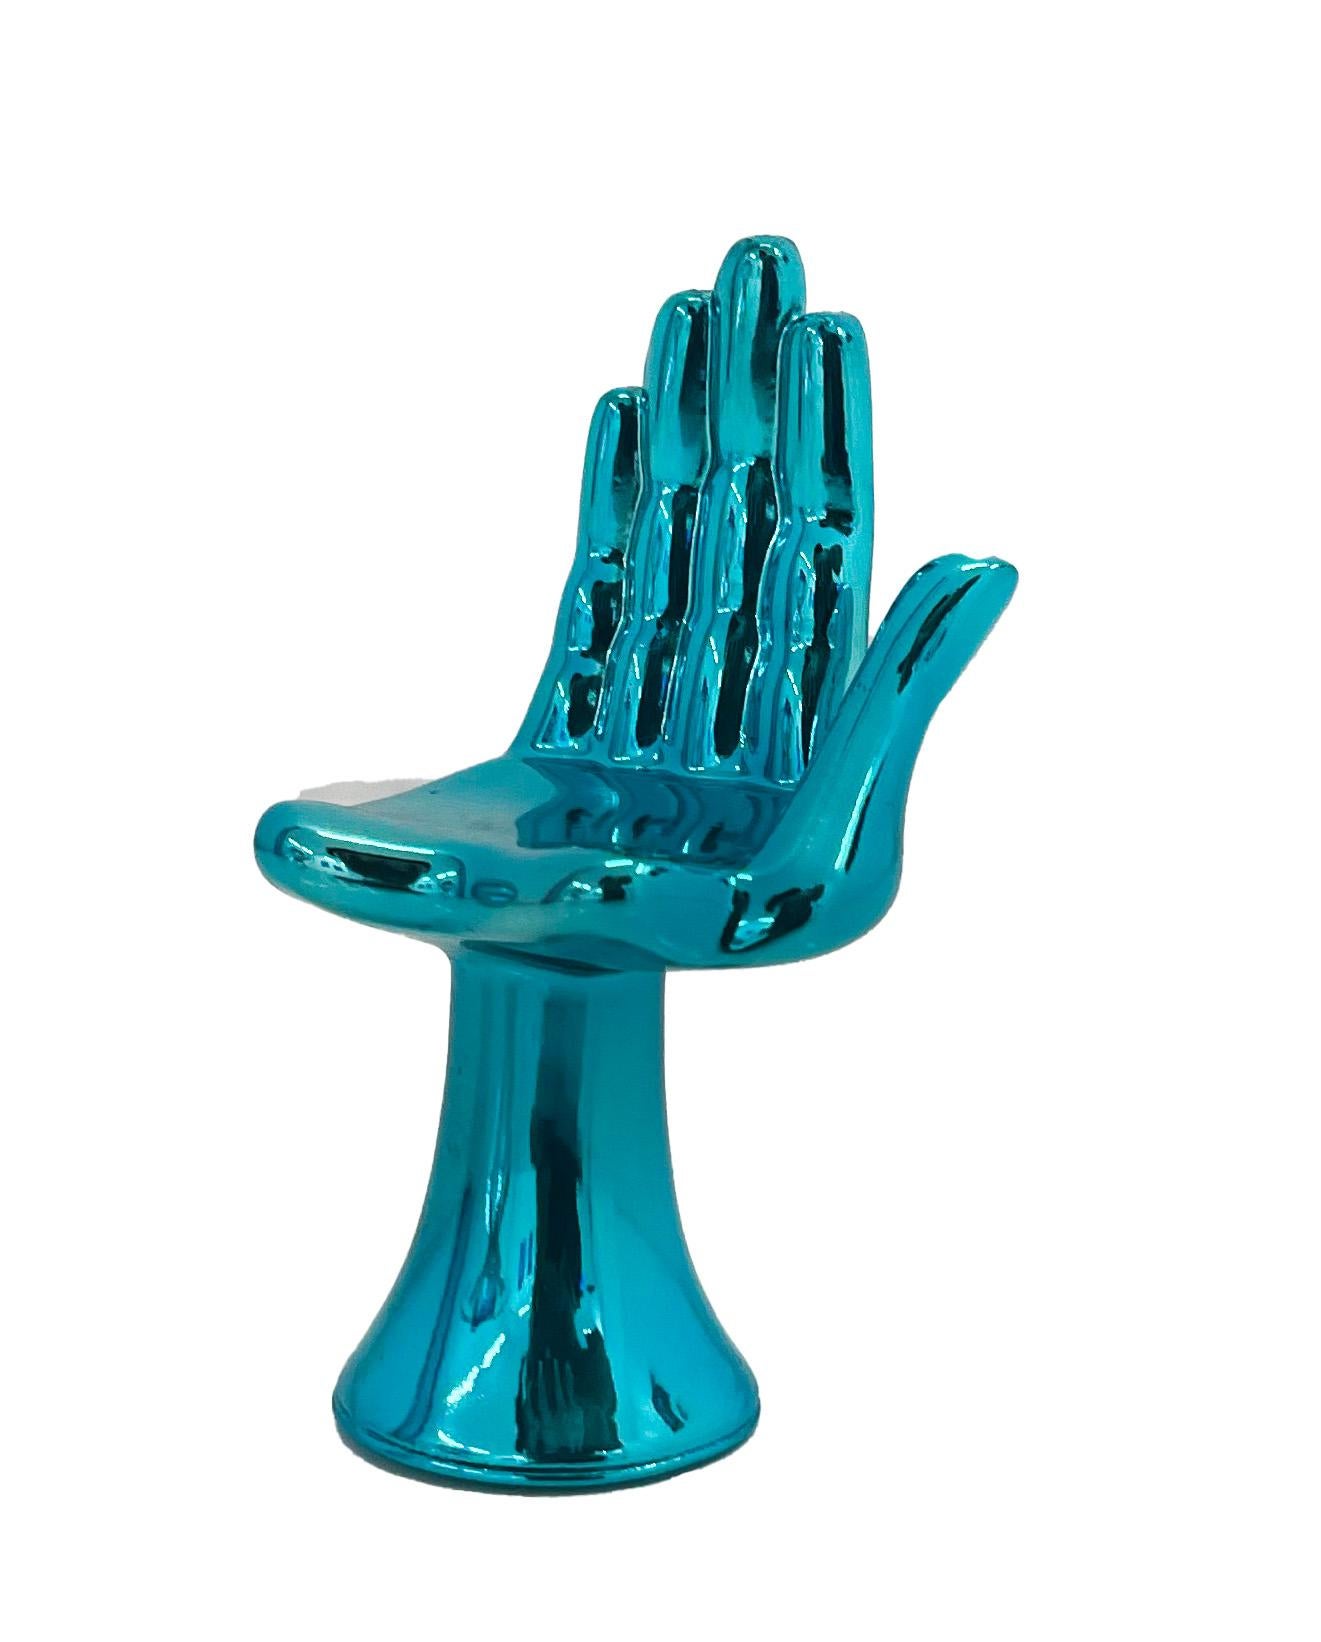 Figurative Sculpture Pedro Friedeberg - "Mano" - Mini version du Hand Chair de Friedeberg, sculpture, tiffany 